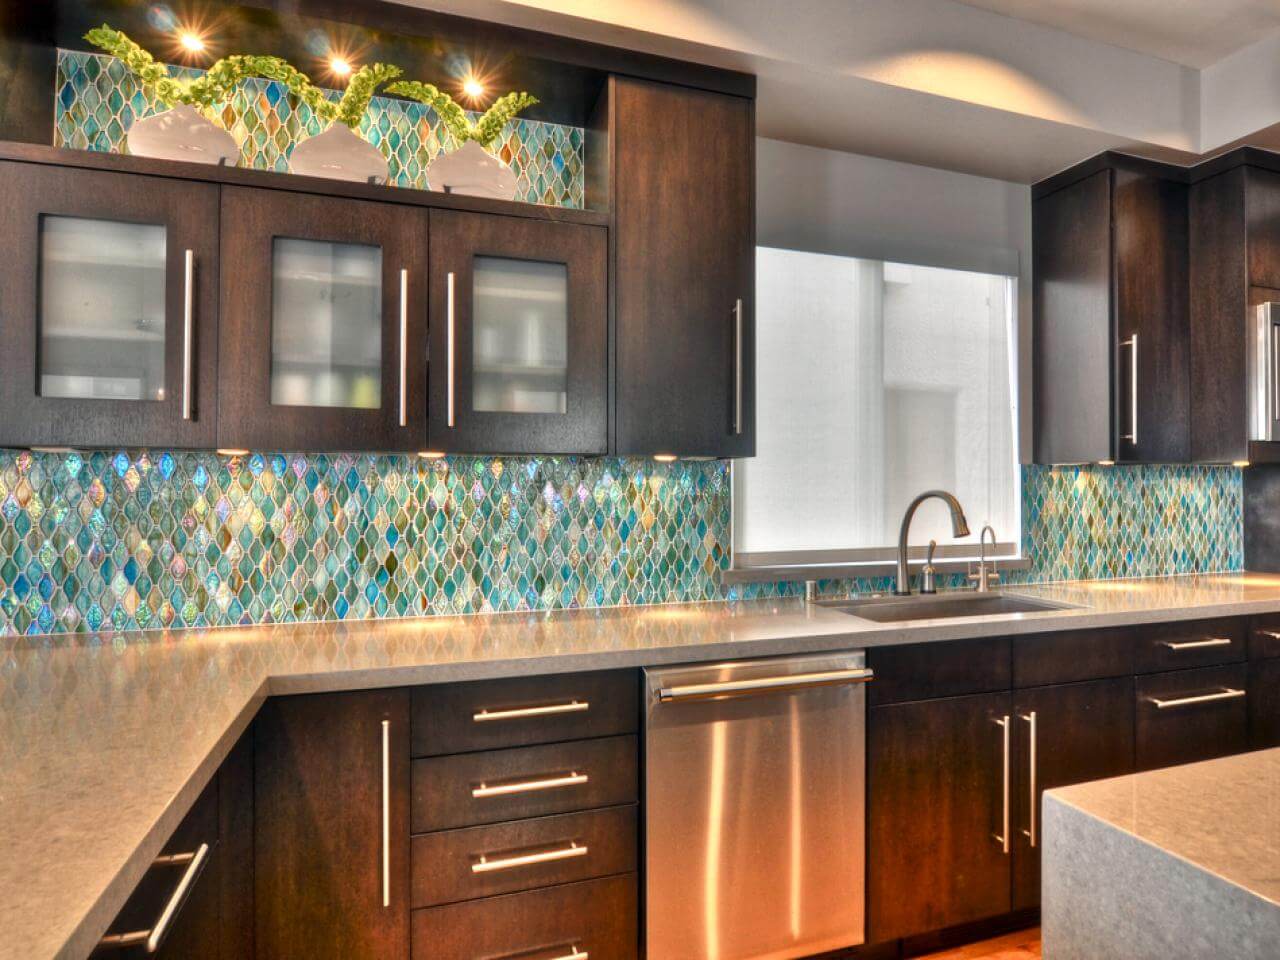 Fantastic kitchen splashback made of glass tiles